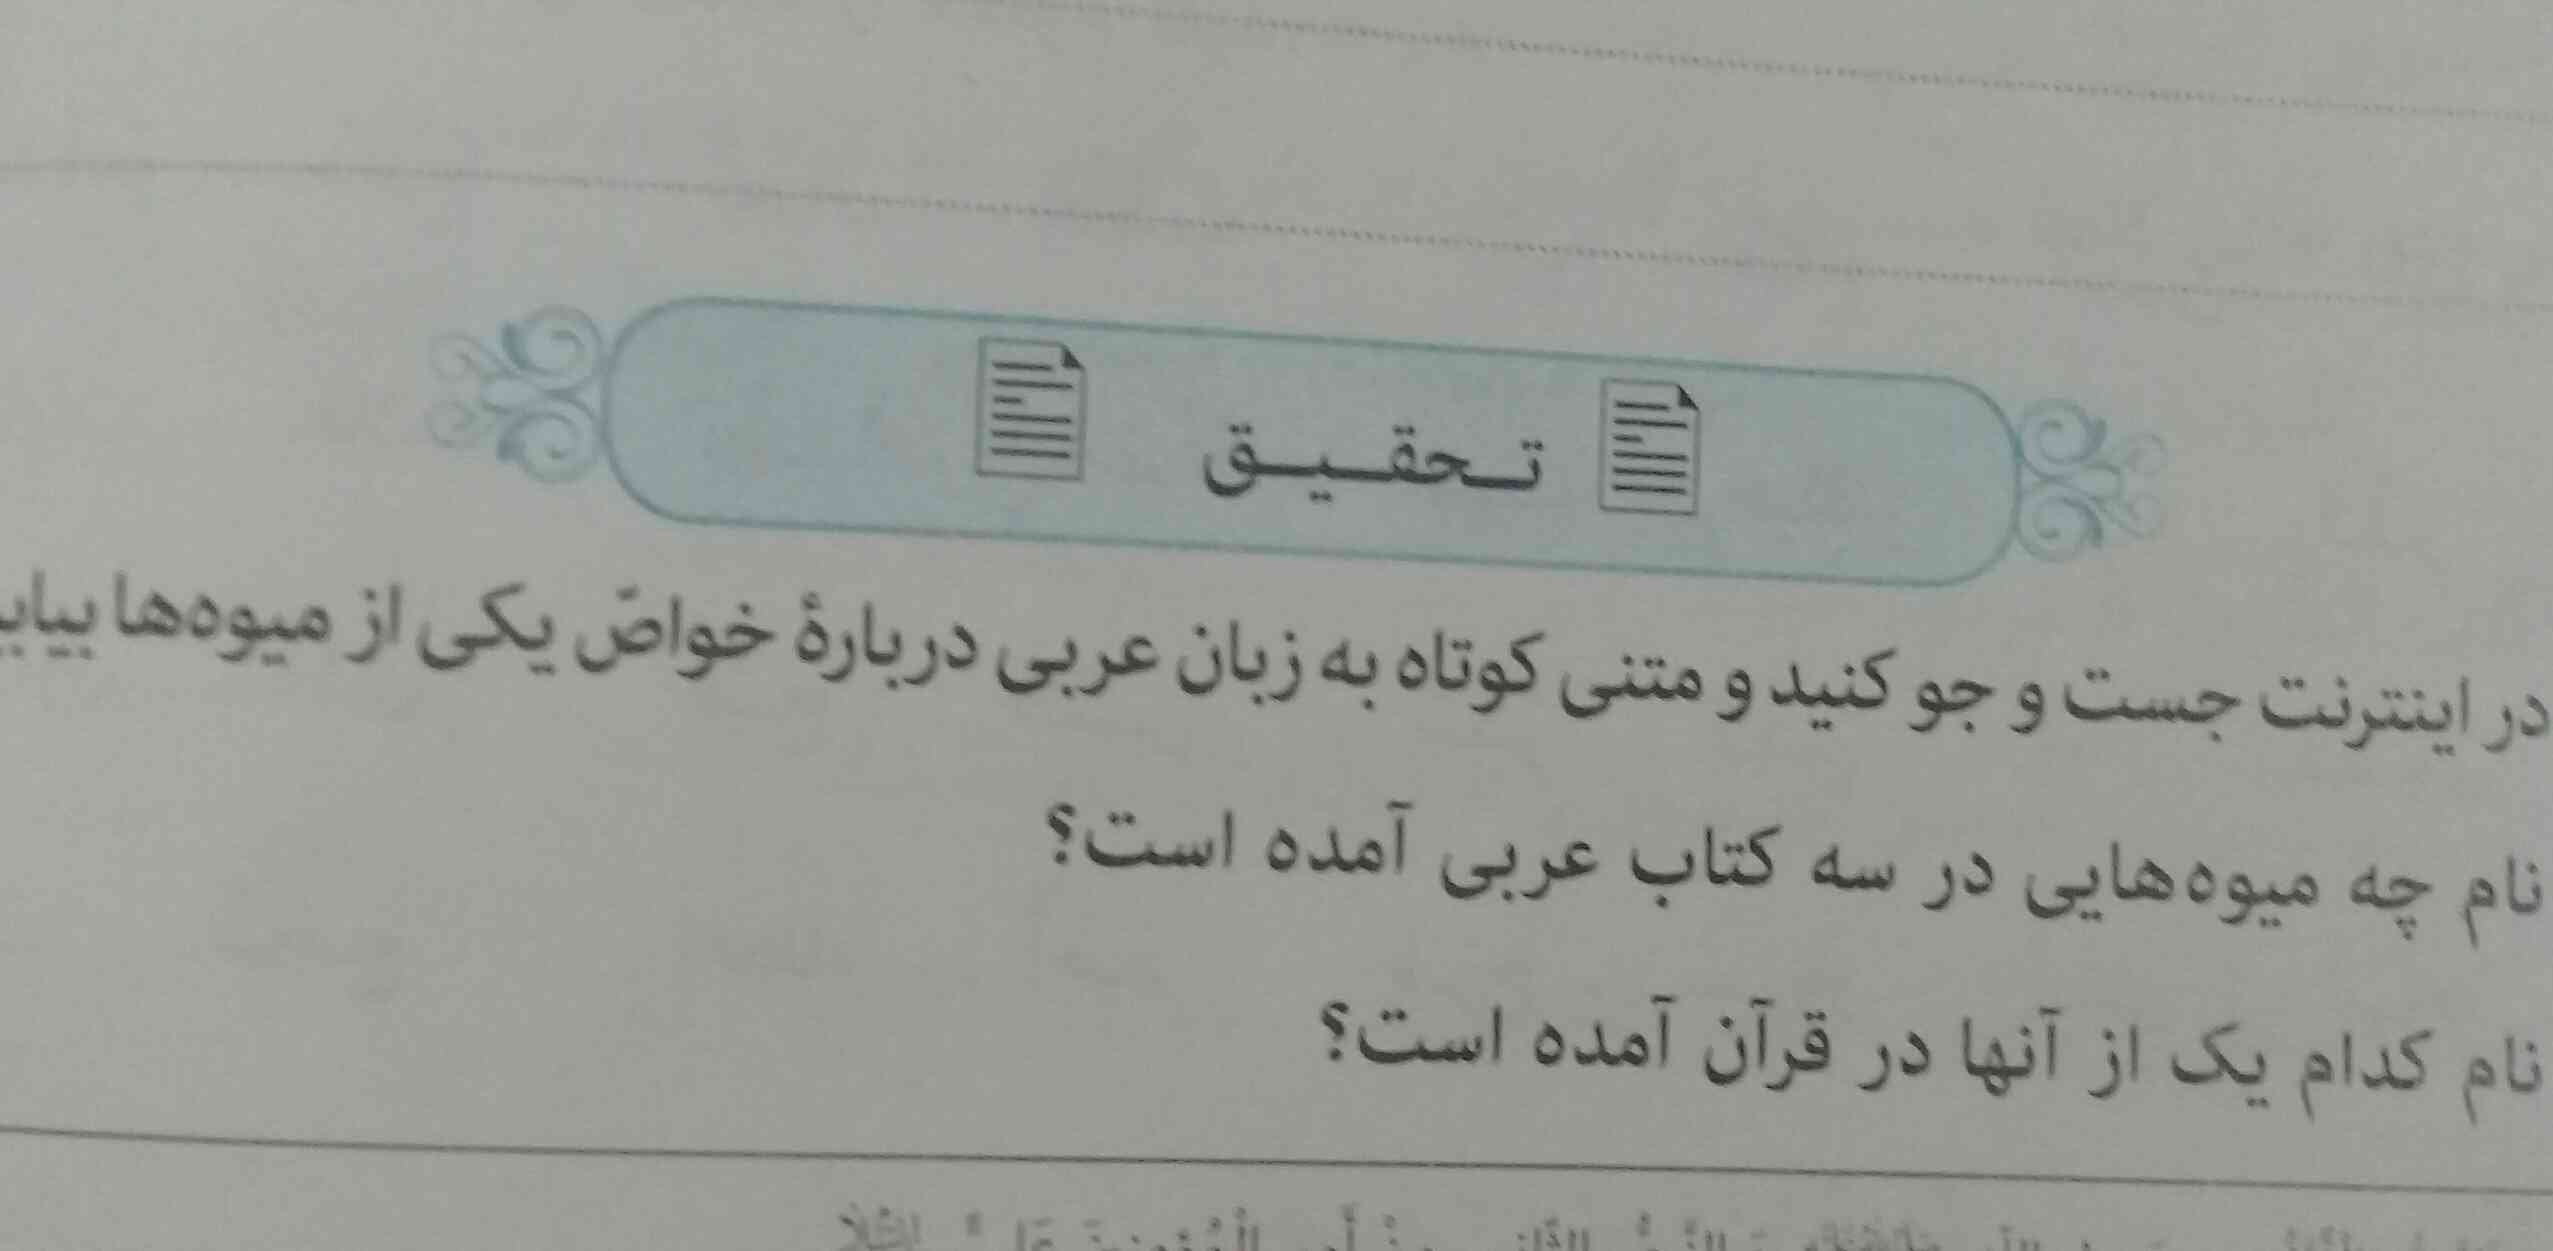 سلام لطفا جواب تحقیق عربی صفحه ۱۰۰ درس ۹ رو بگید ممنون 